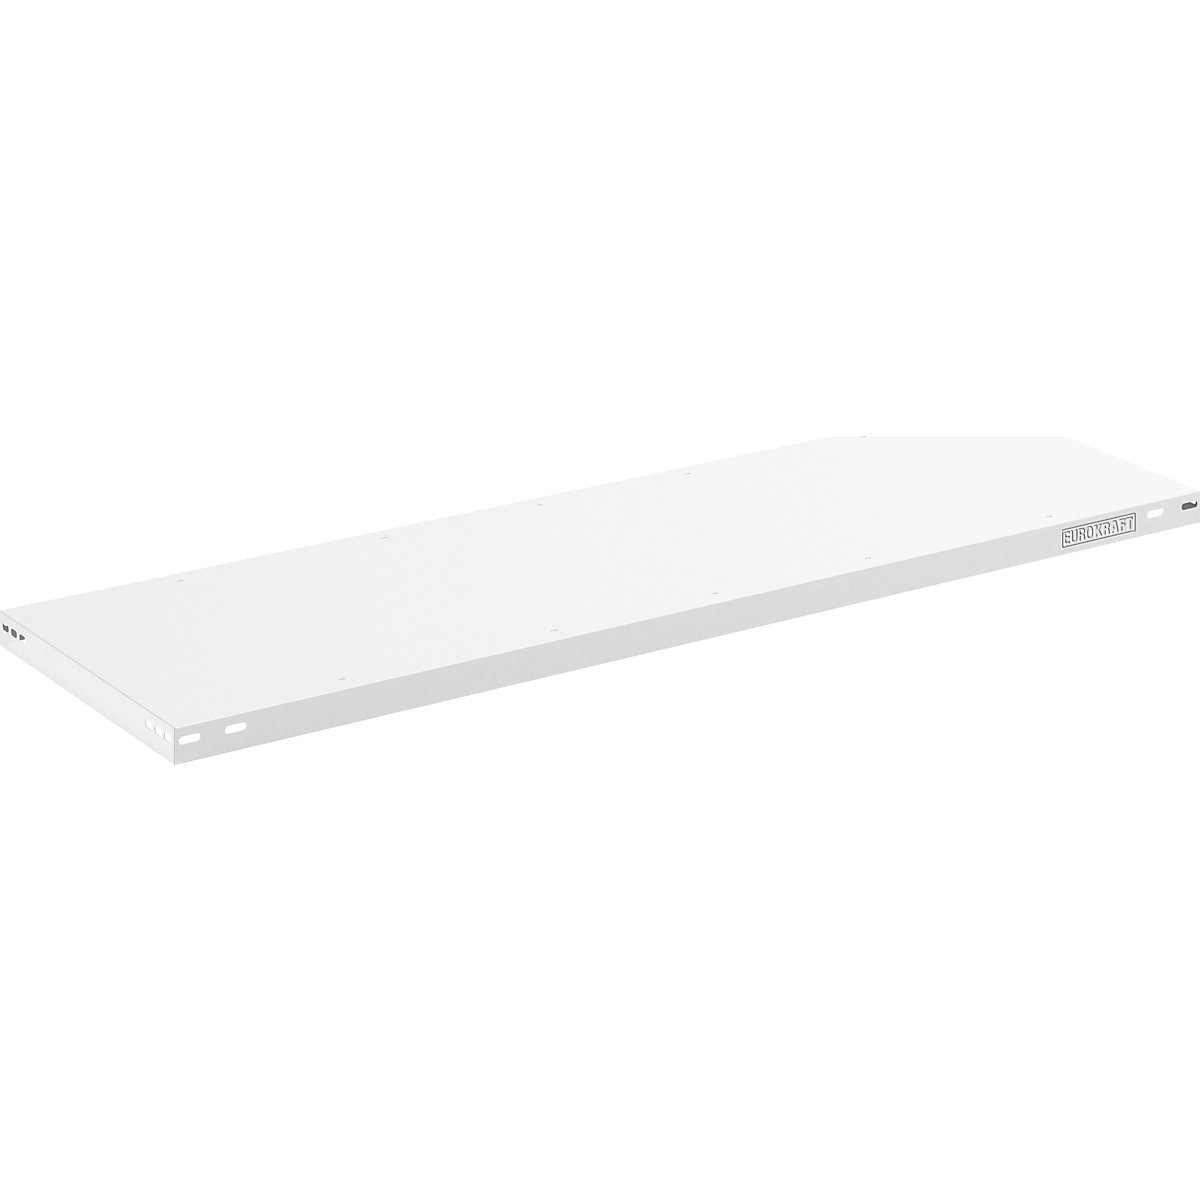 Shelf – eurokraft pro, light grey, medium duty, WxD 1300 x 500 mm